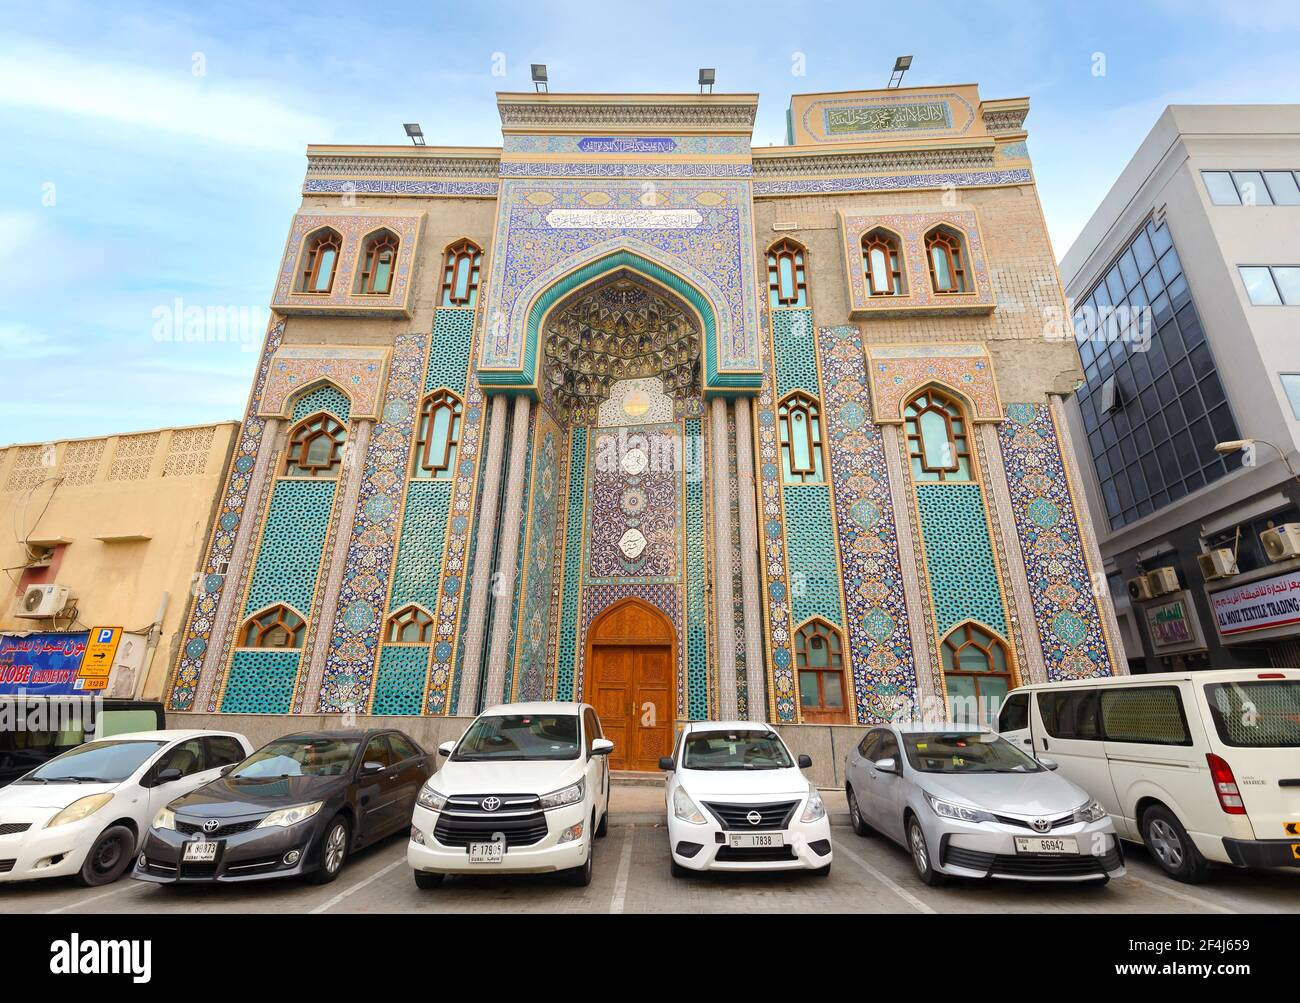 Ali ibn Abi Talib Mezquita iraní en Bur Dubai. Una mezquita chií iraní Hosainia en los Emiratos Árabes Unidos. Mezquita de estilo persa en Dubai. Foto de stock